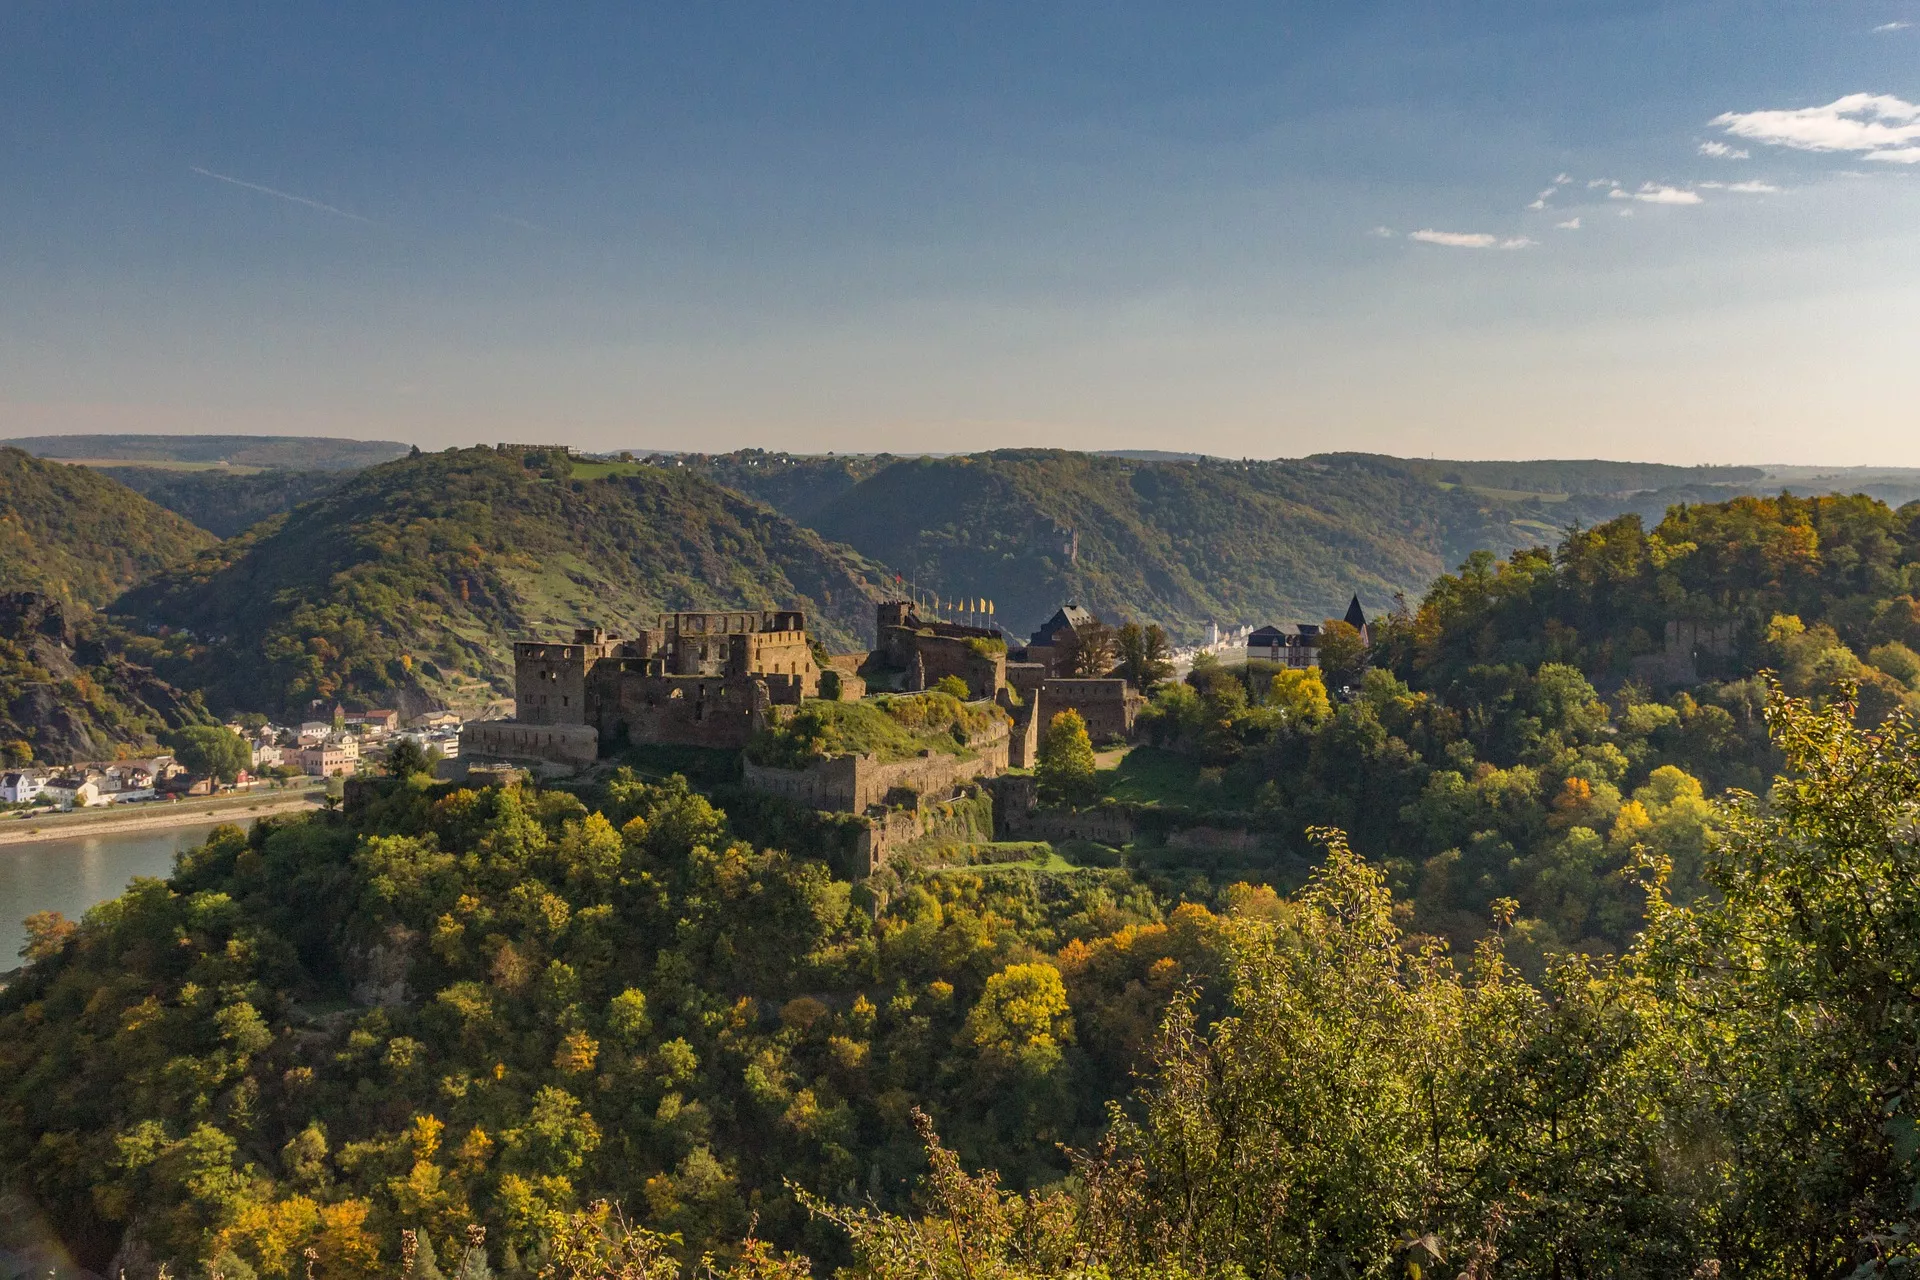 Rhine Castles Trail in Germany, Europe | Trekking & Hiking - Rated 0.9